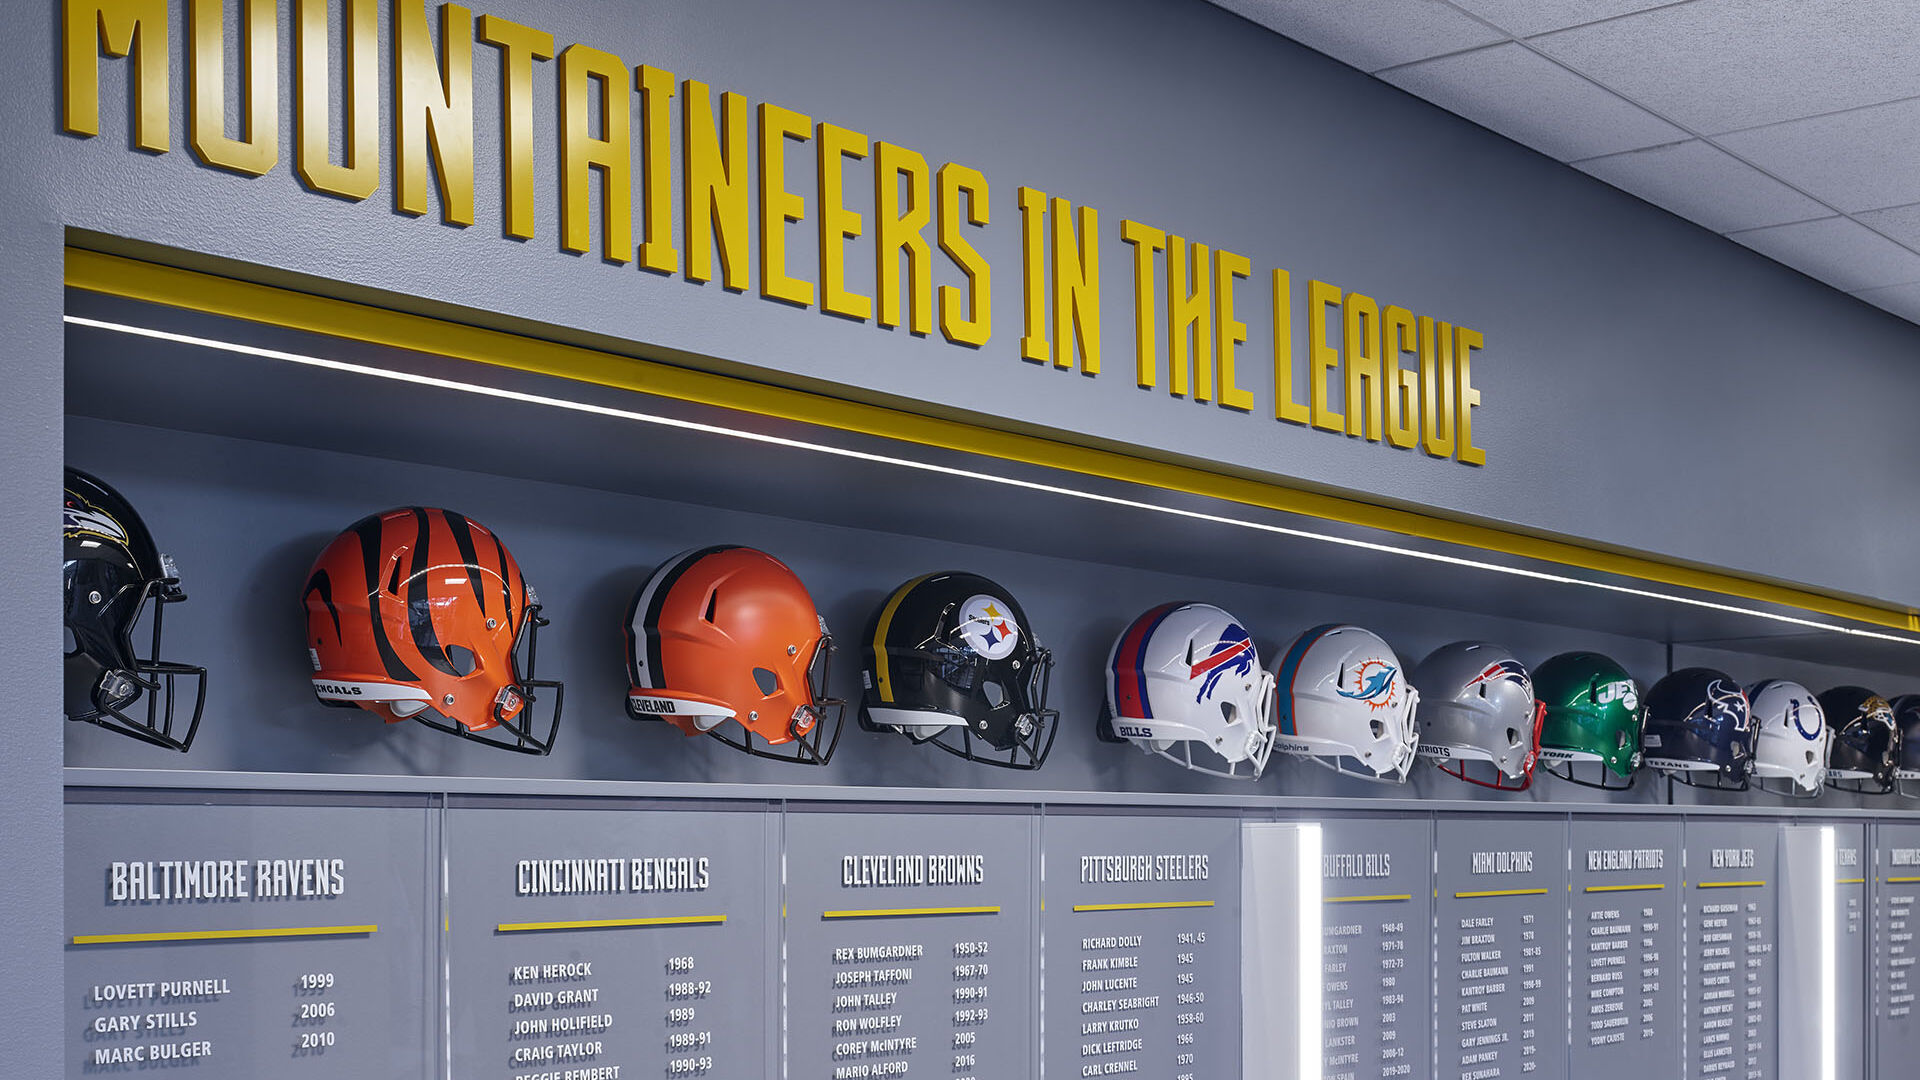 Milan Puskar Center Football Hallway honoring Mountaineer players in the NFL